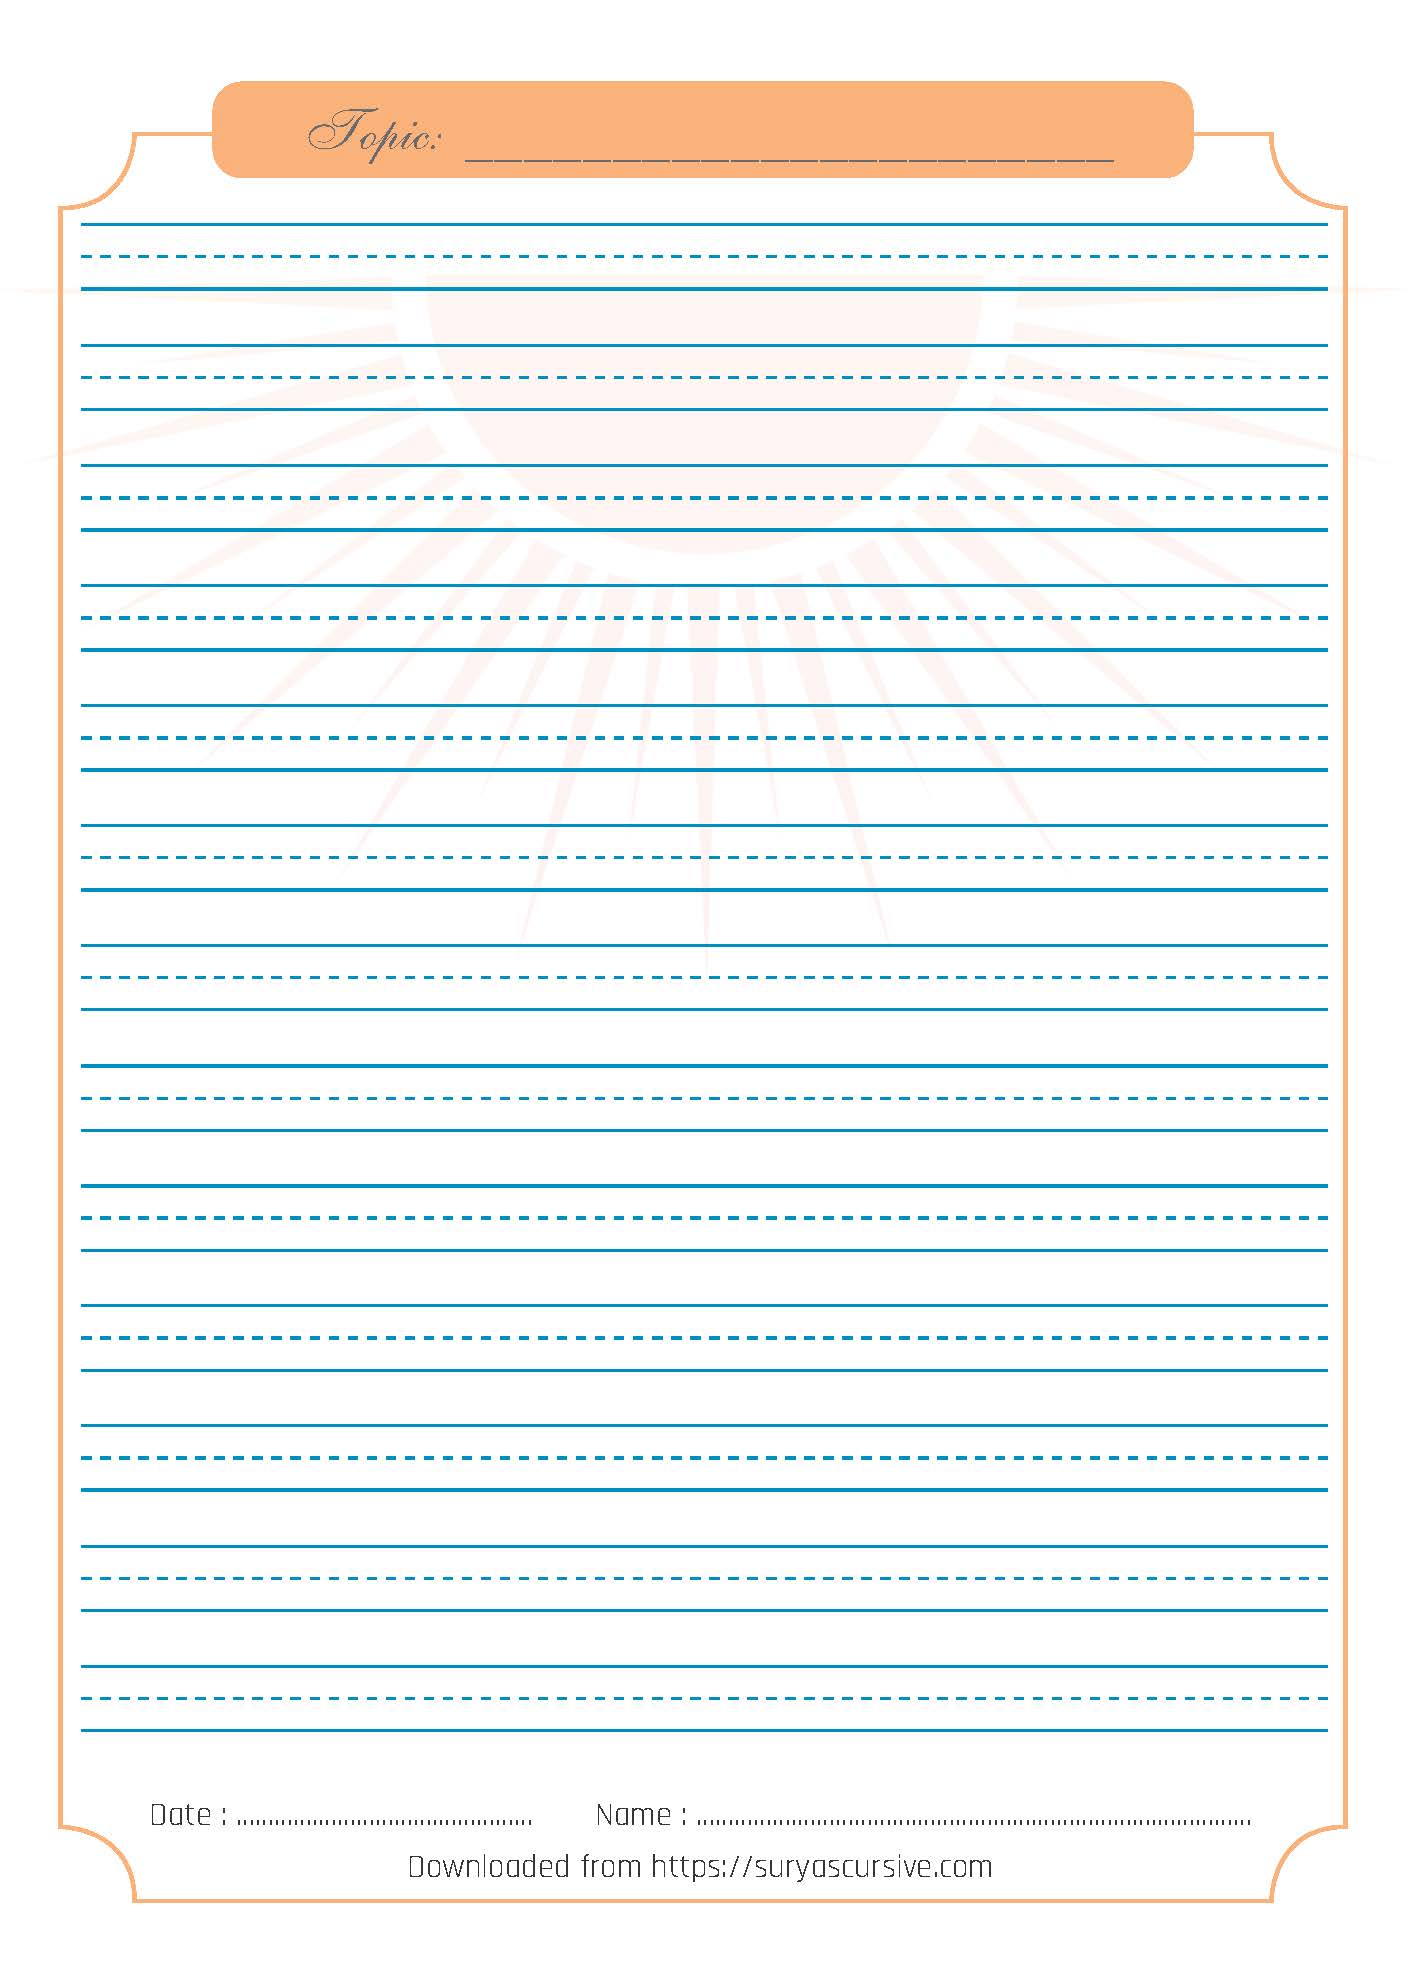 21-cursive-handwriting-practice-pdf-blank-cursive-writing-worksheets-fo-great-blank